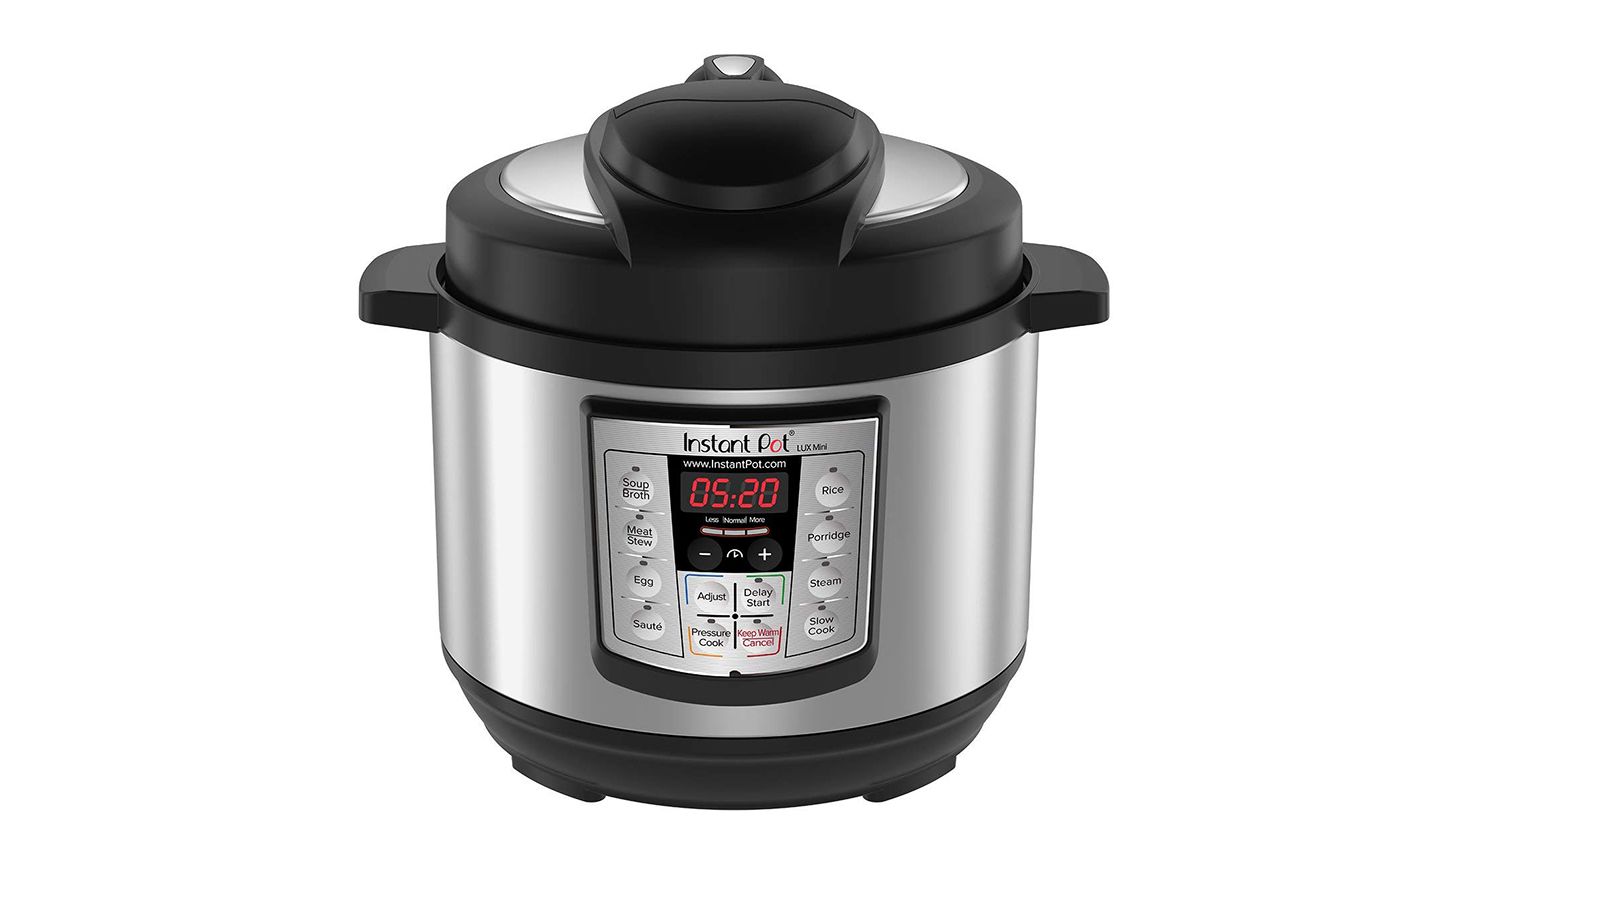 Instant Pot Lux Mini 3 Qt 6 in 1 Electric Pressure/Slow Cooker